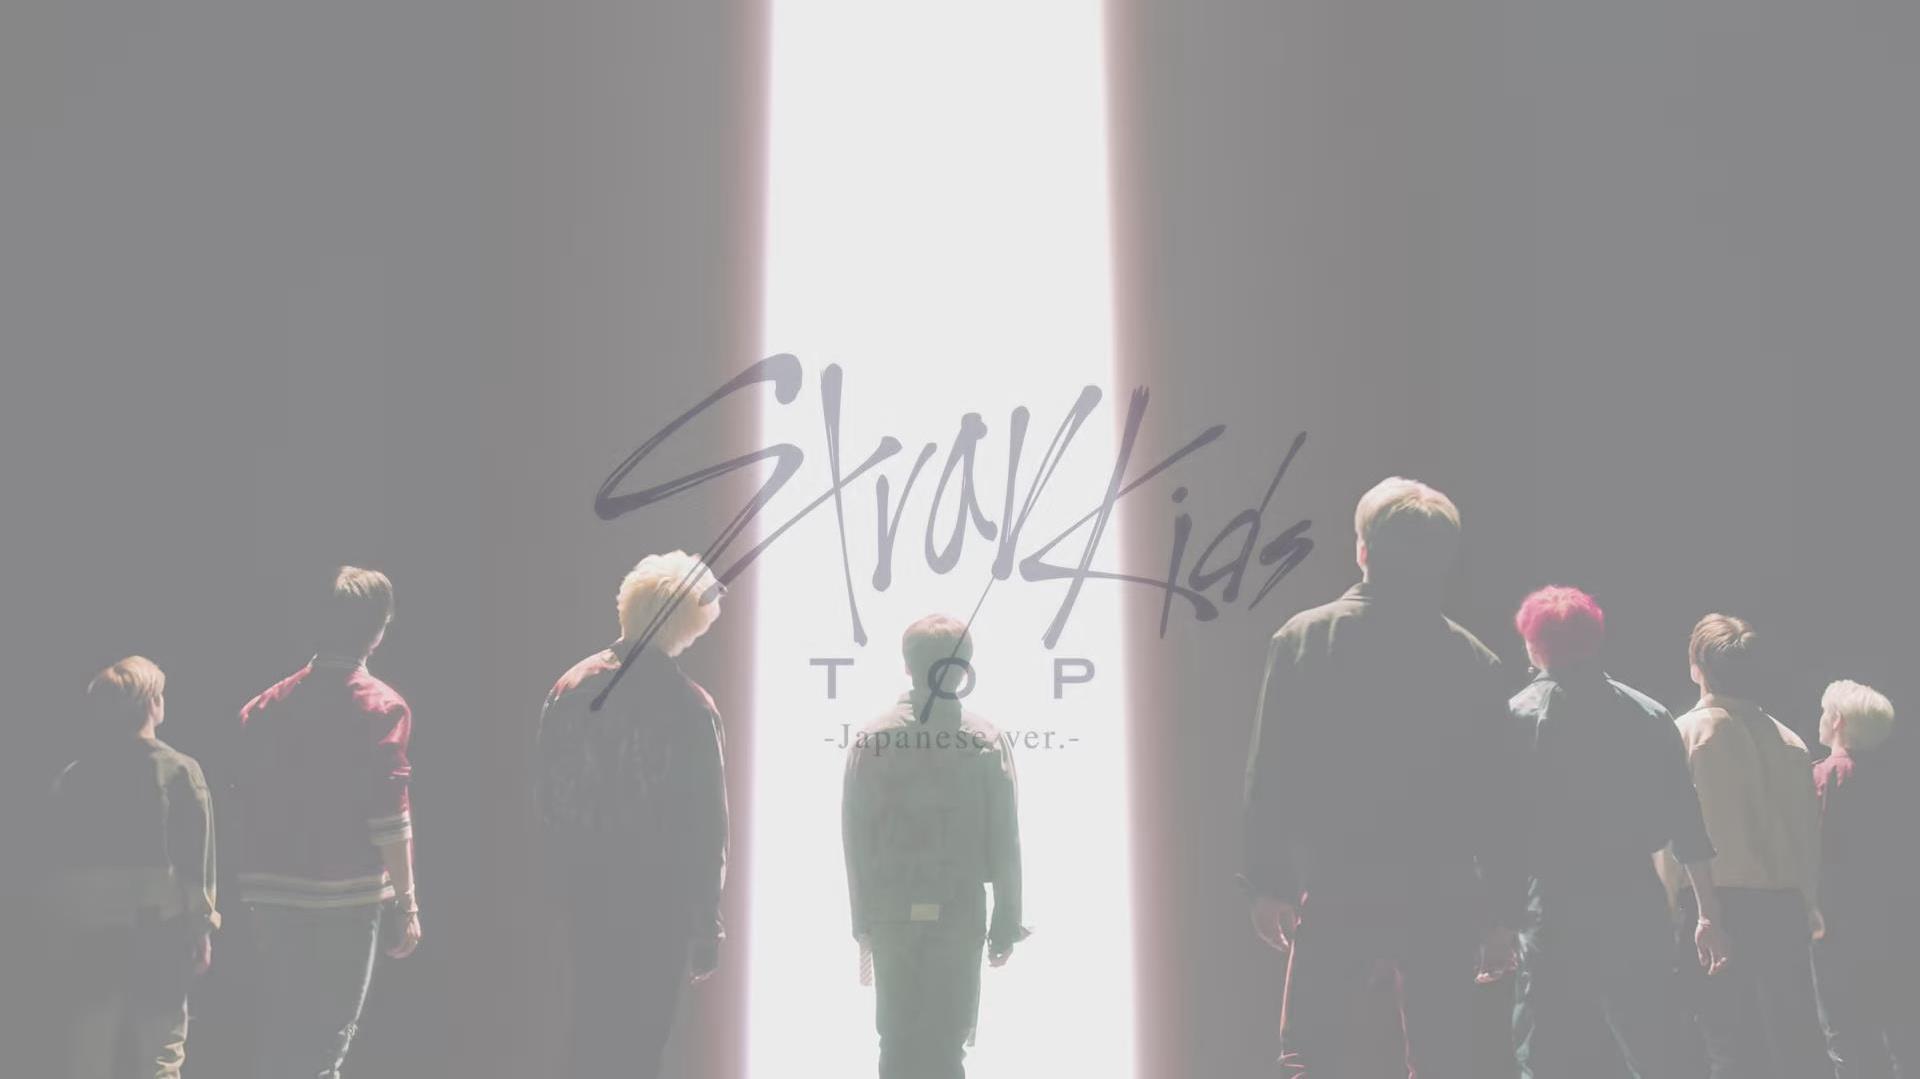 Stray Kids - TOP (Japanese version)